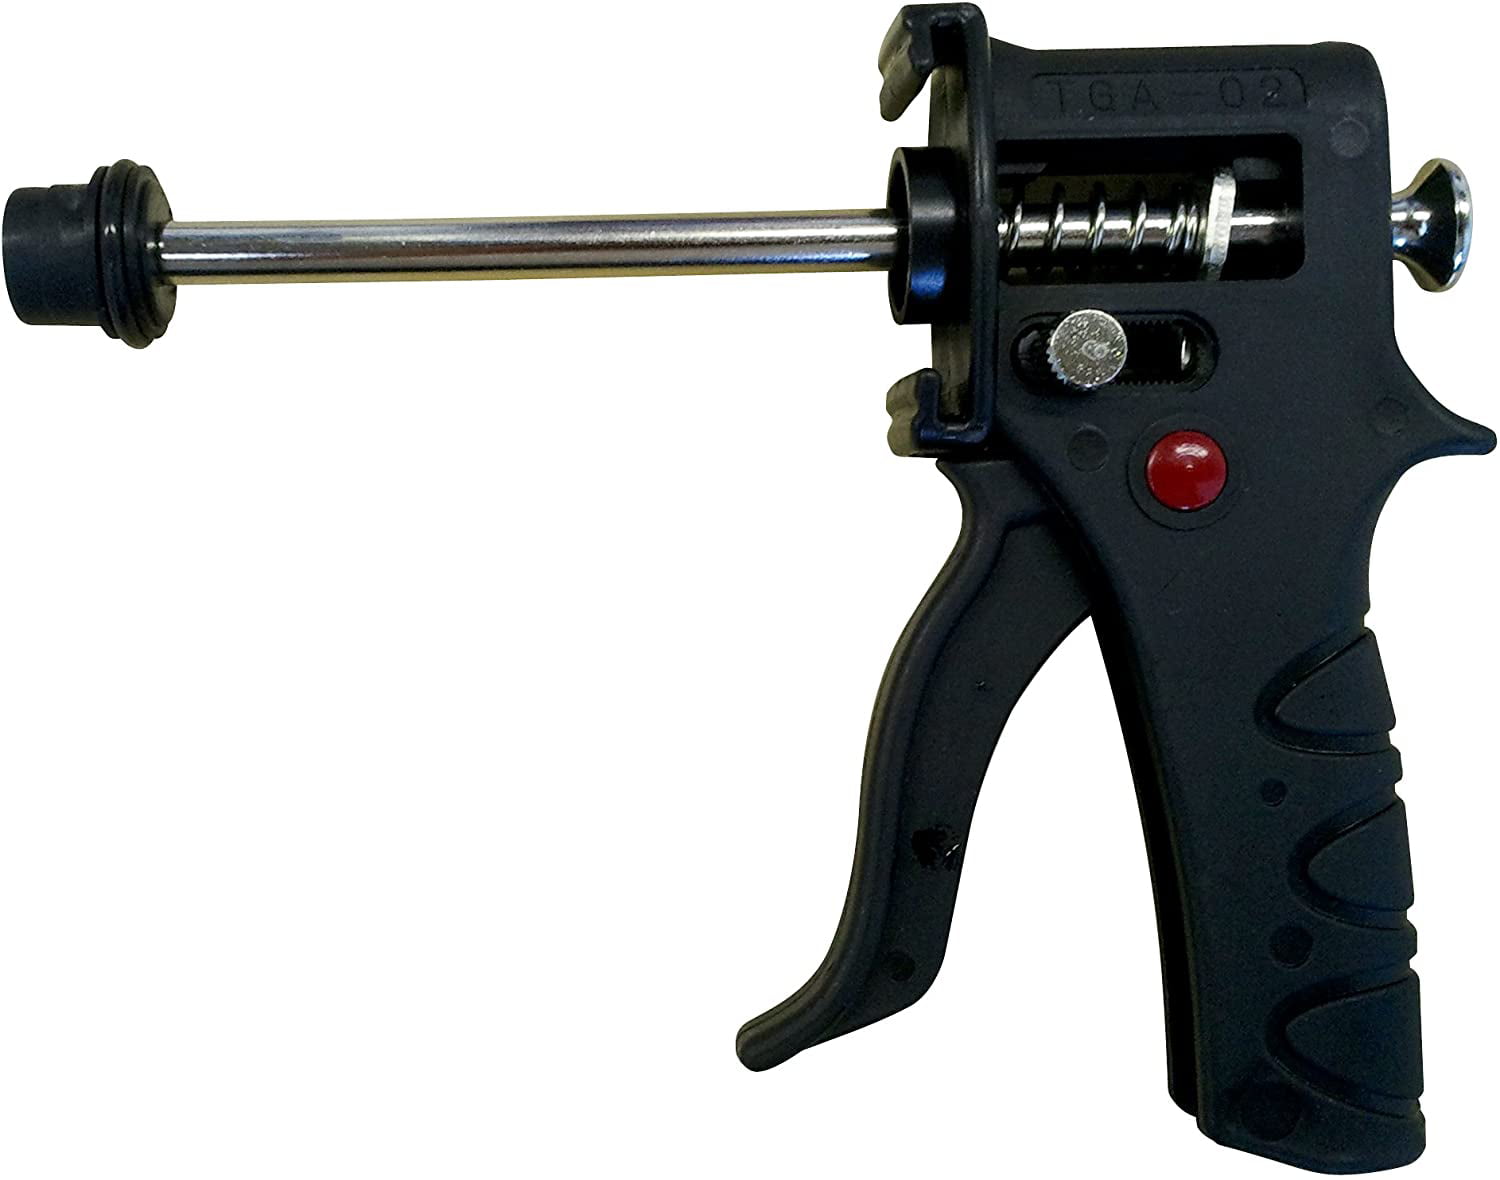 Vectorfog 2 X Professional Bait Gun DH1 Standard 35 Grams 